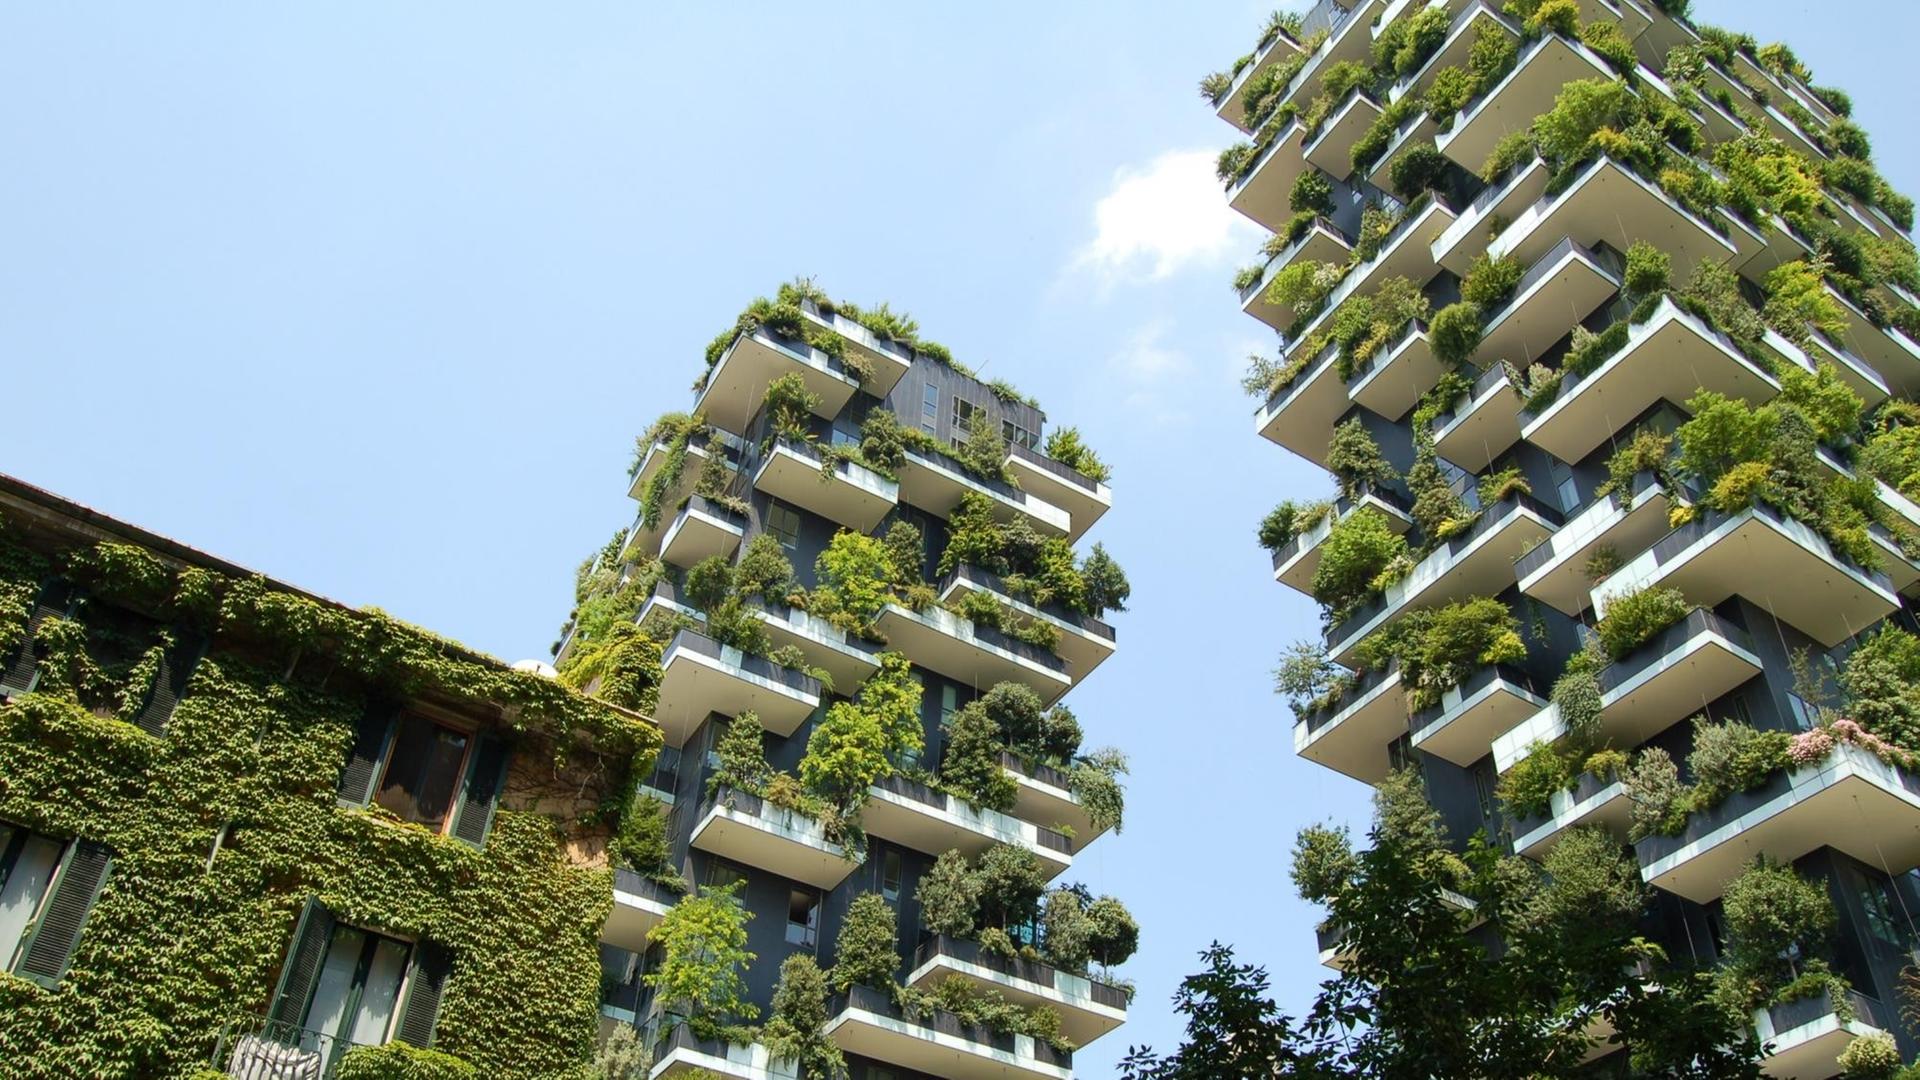 Begrünte Hochhäuser "Bosco verticale" in Mailand, Italien.